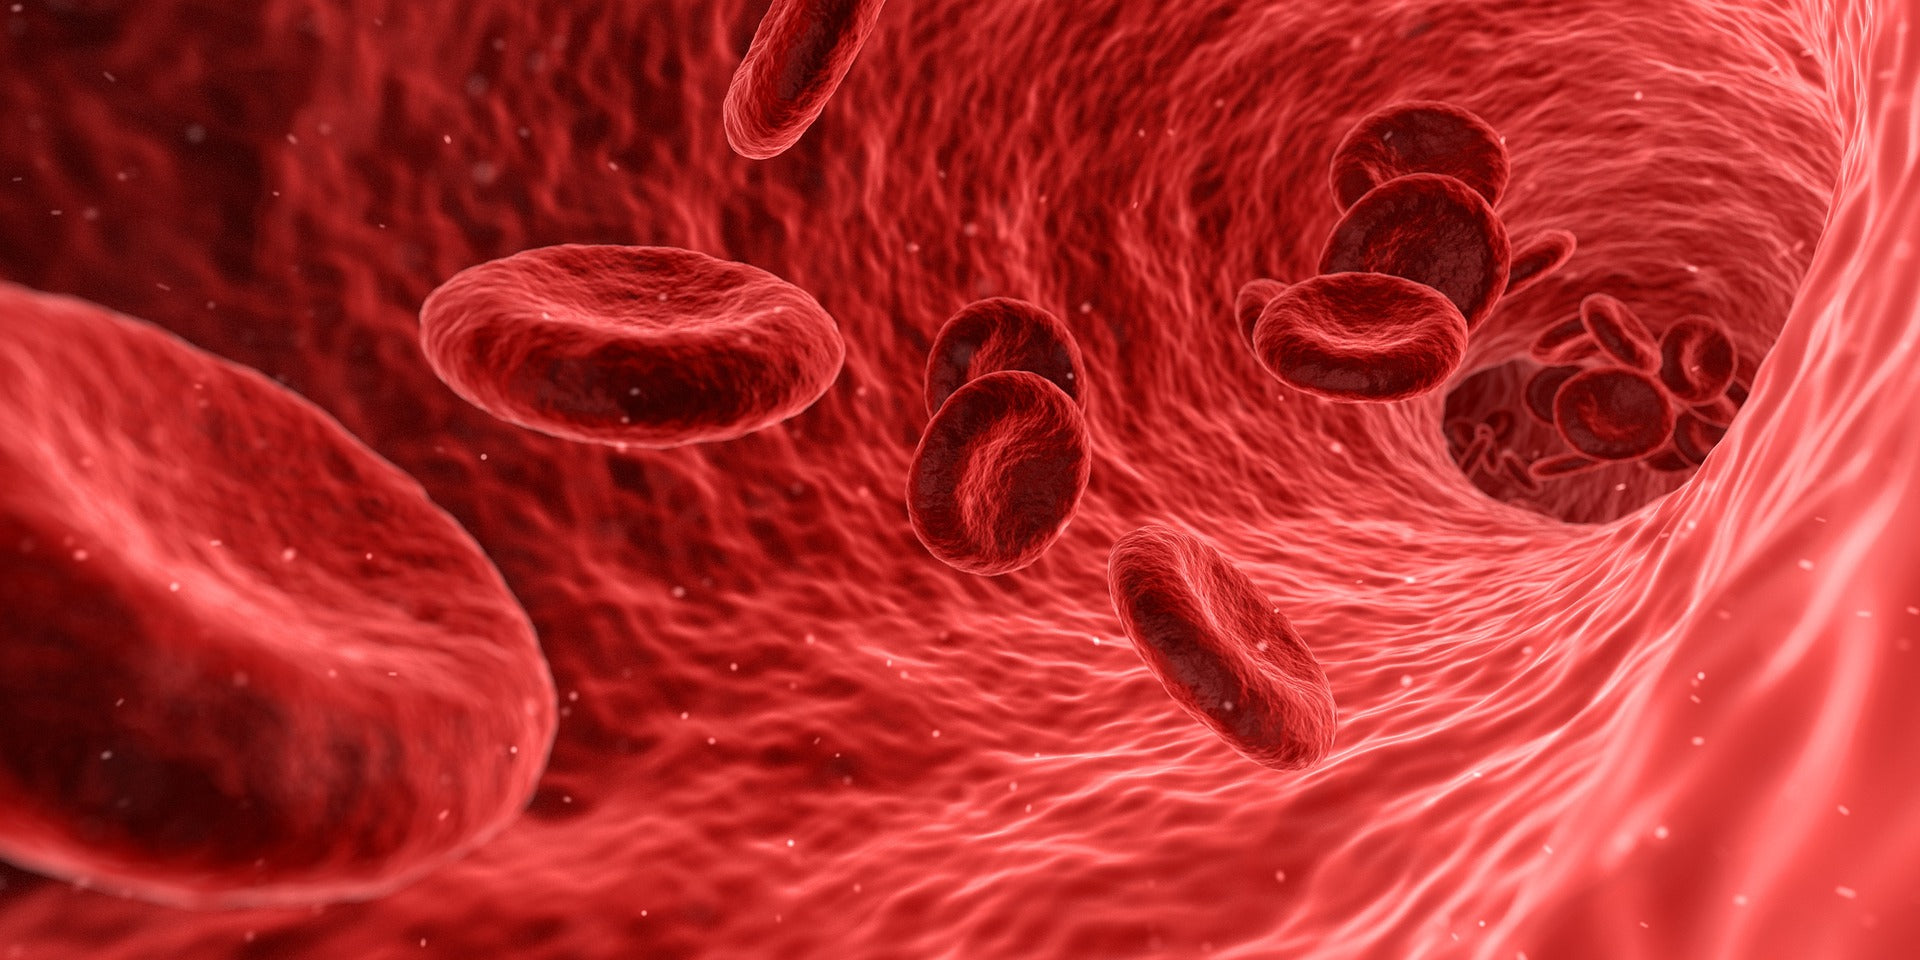 Platelet Rich Plasma Treatment for Sexual Dysfunction